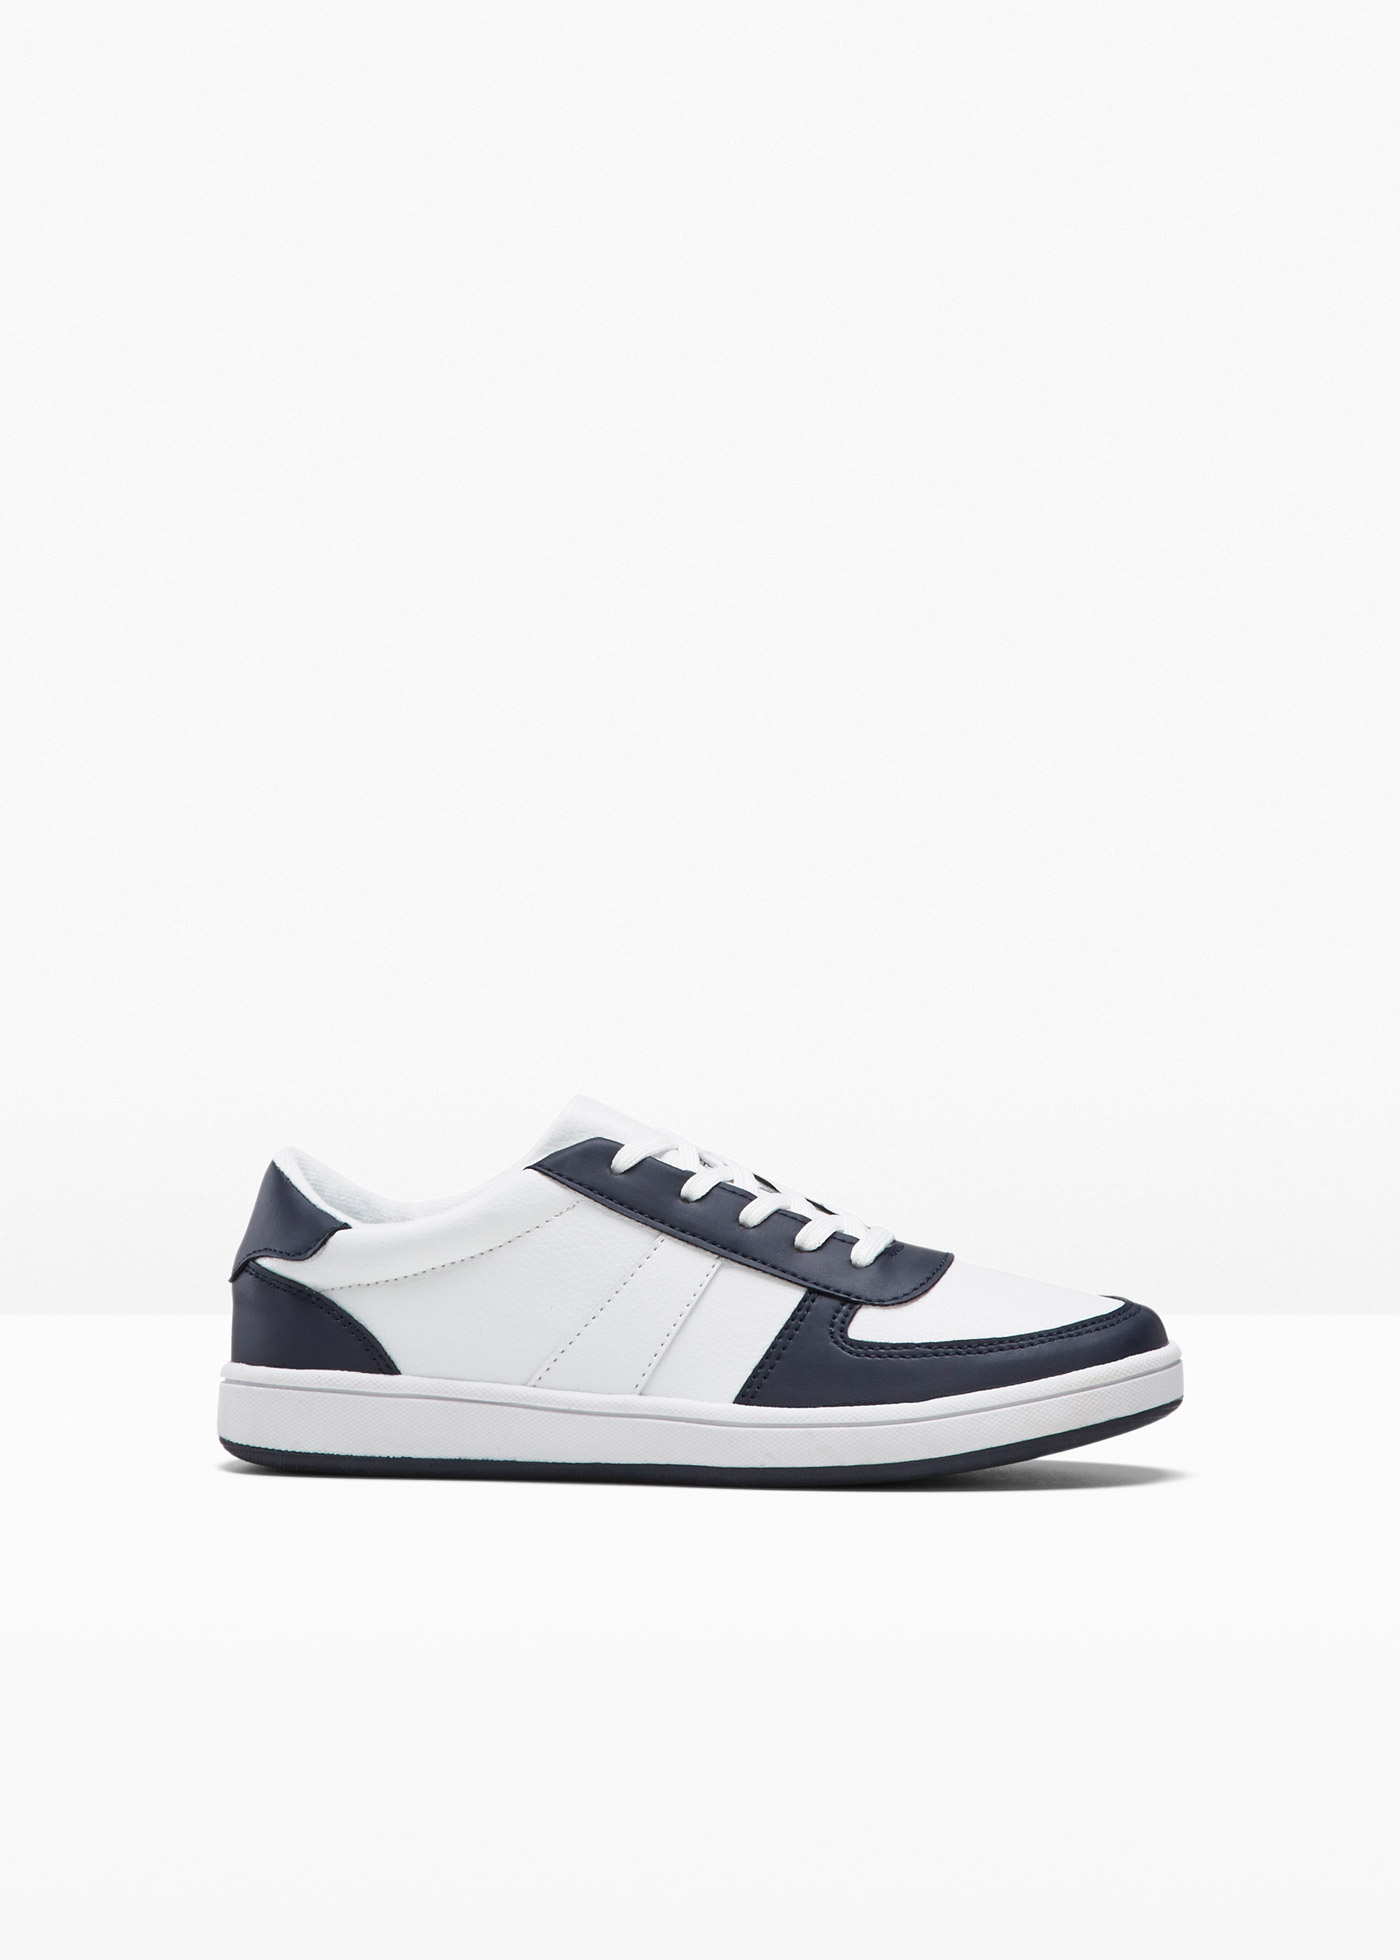 Vielfältig kombinierbarer Sneaker (96715381) in weiß/dunkelblau